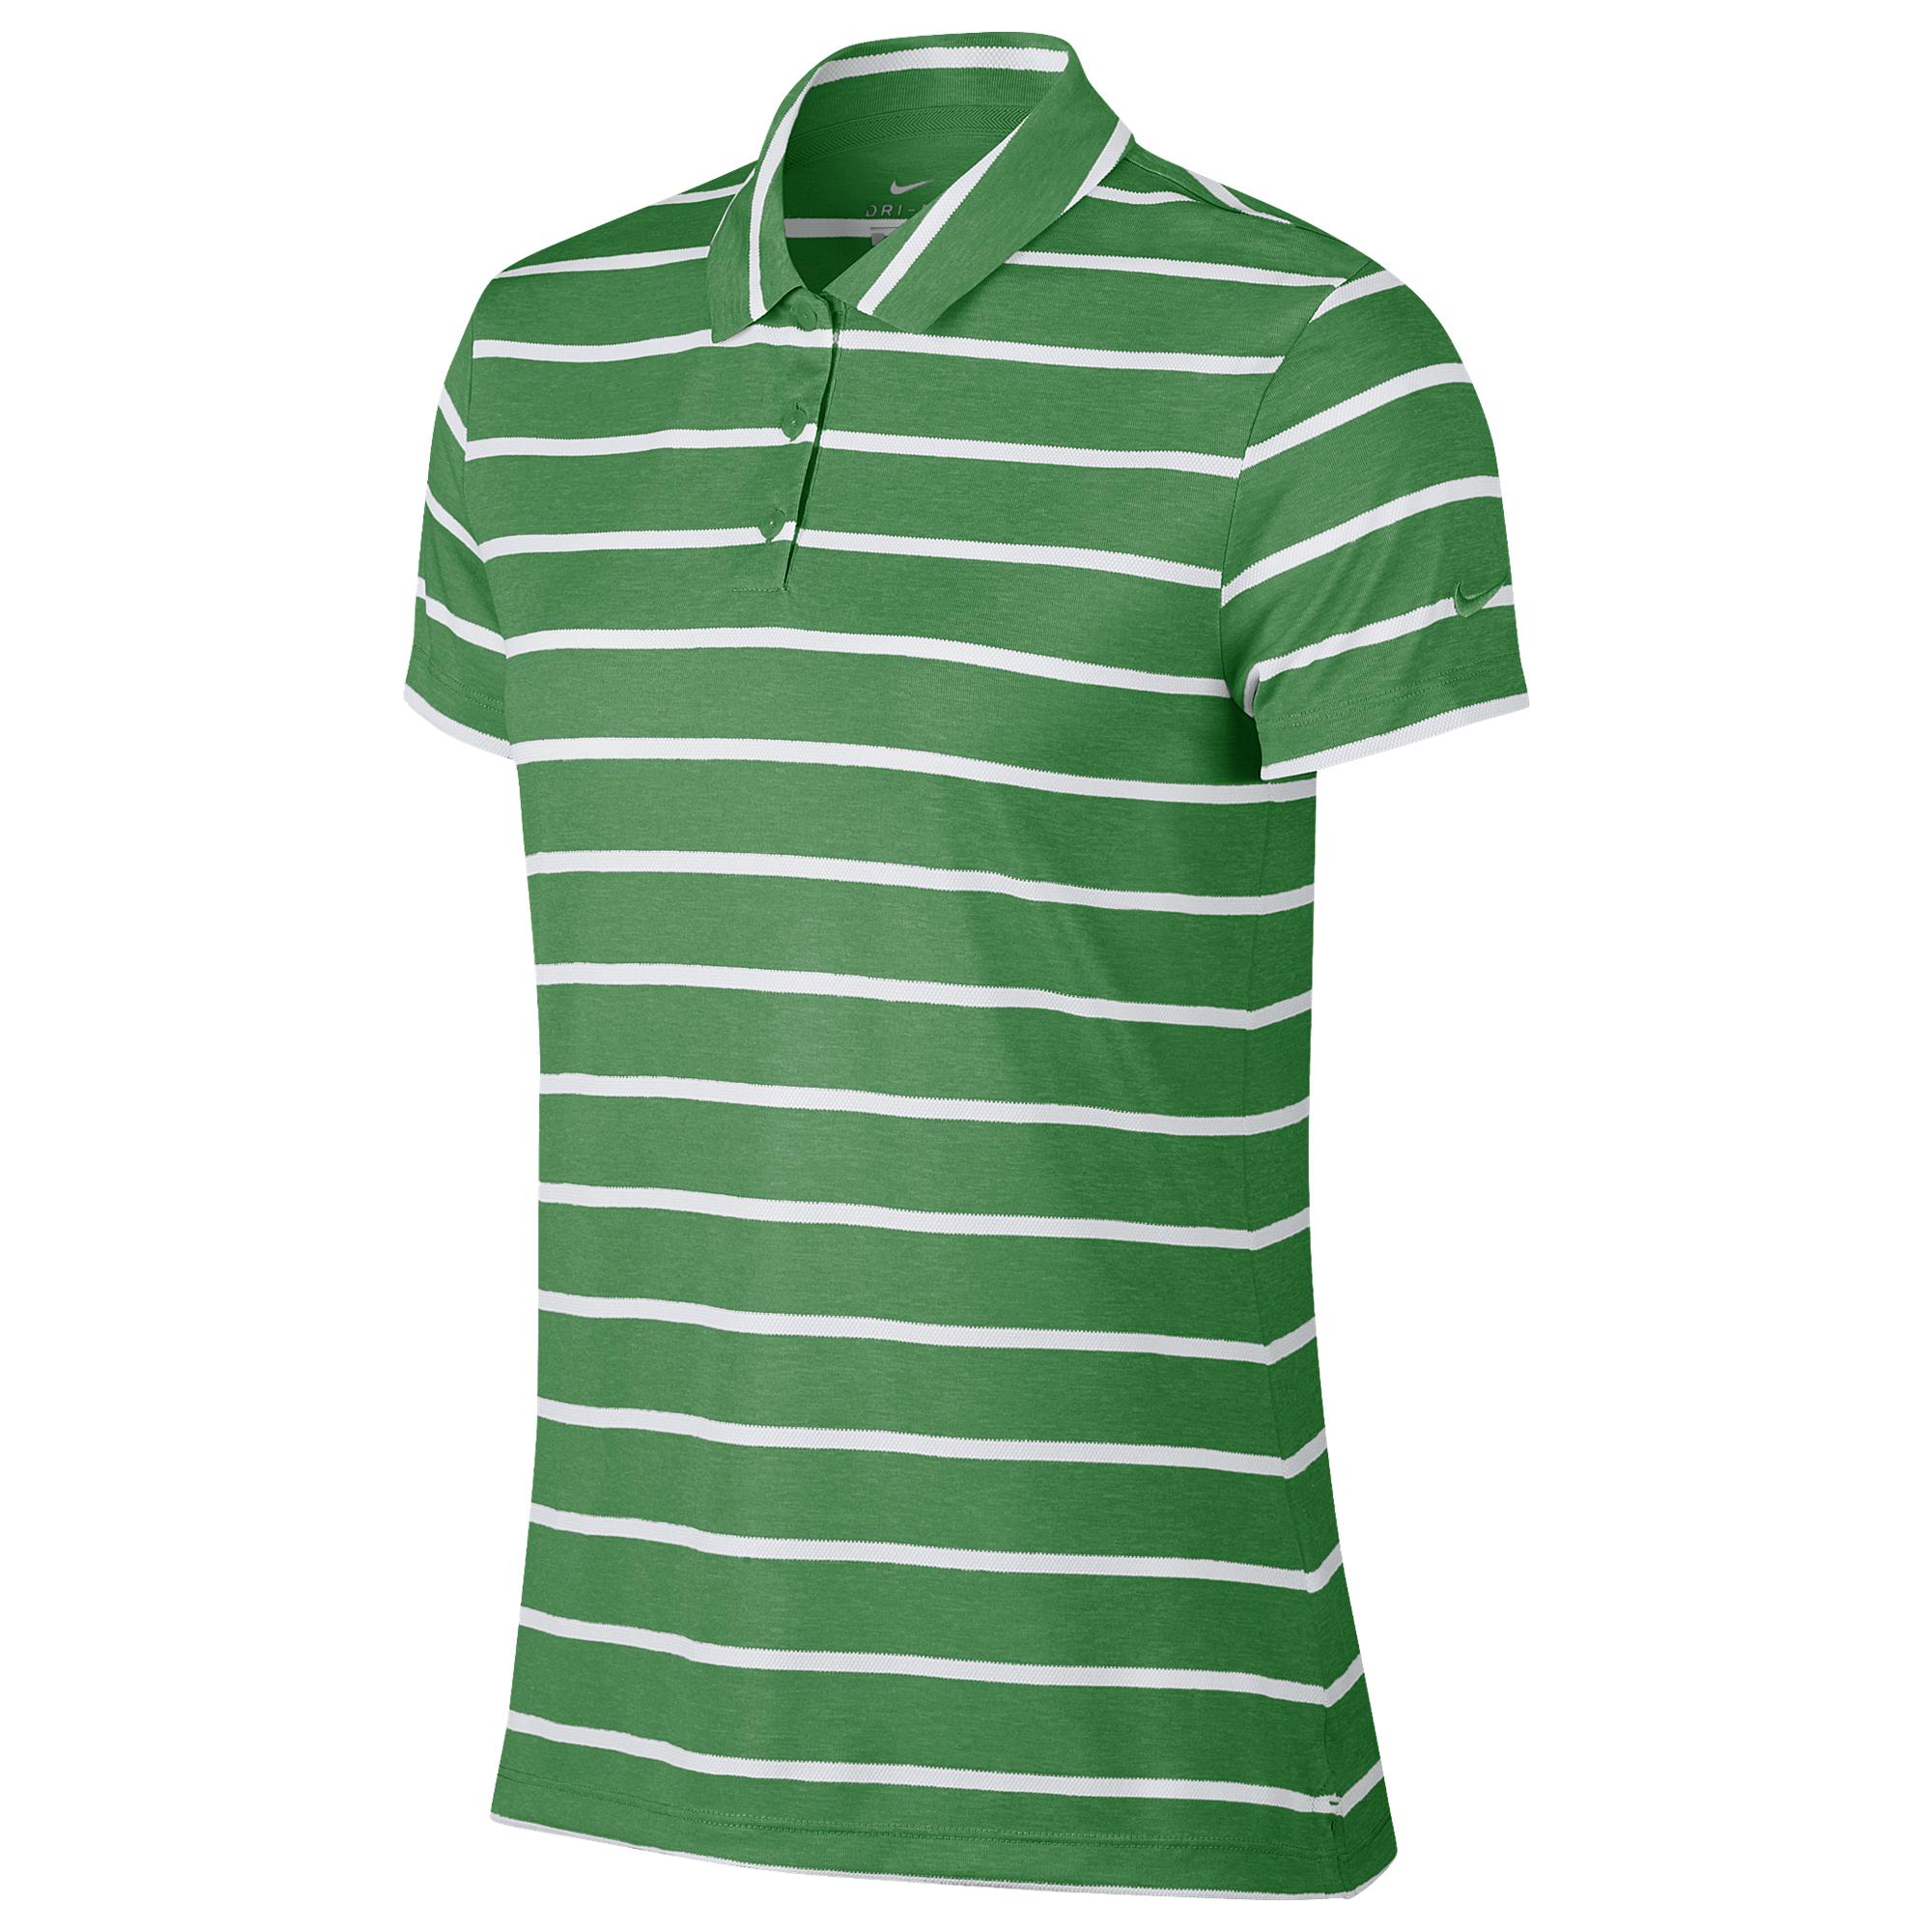 Nike Dri-fit Dry Stripe Golf Polo in Green - Lyst